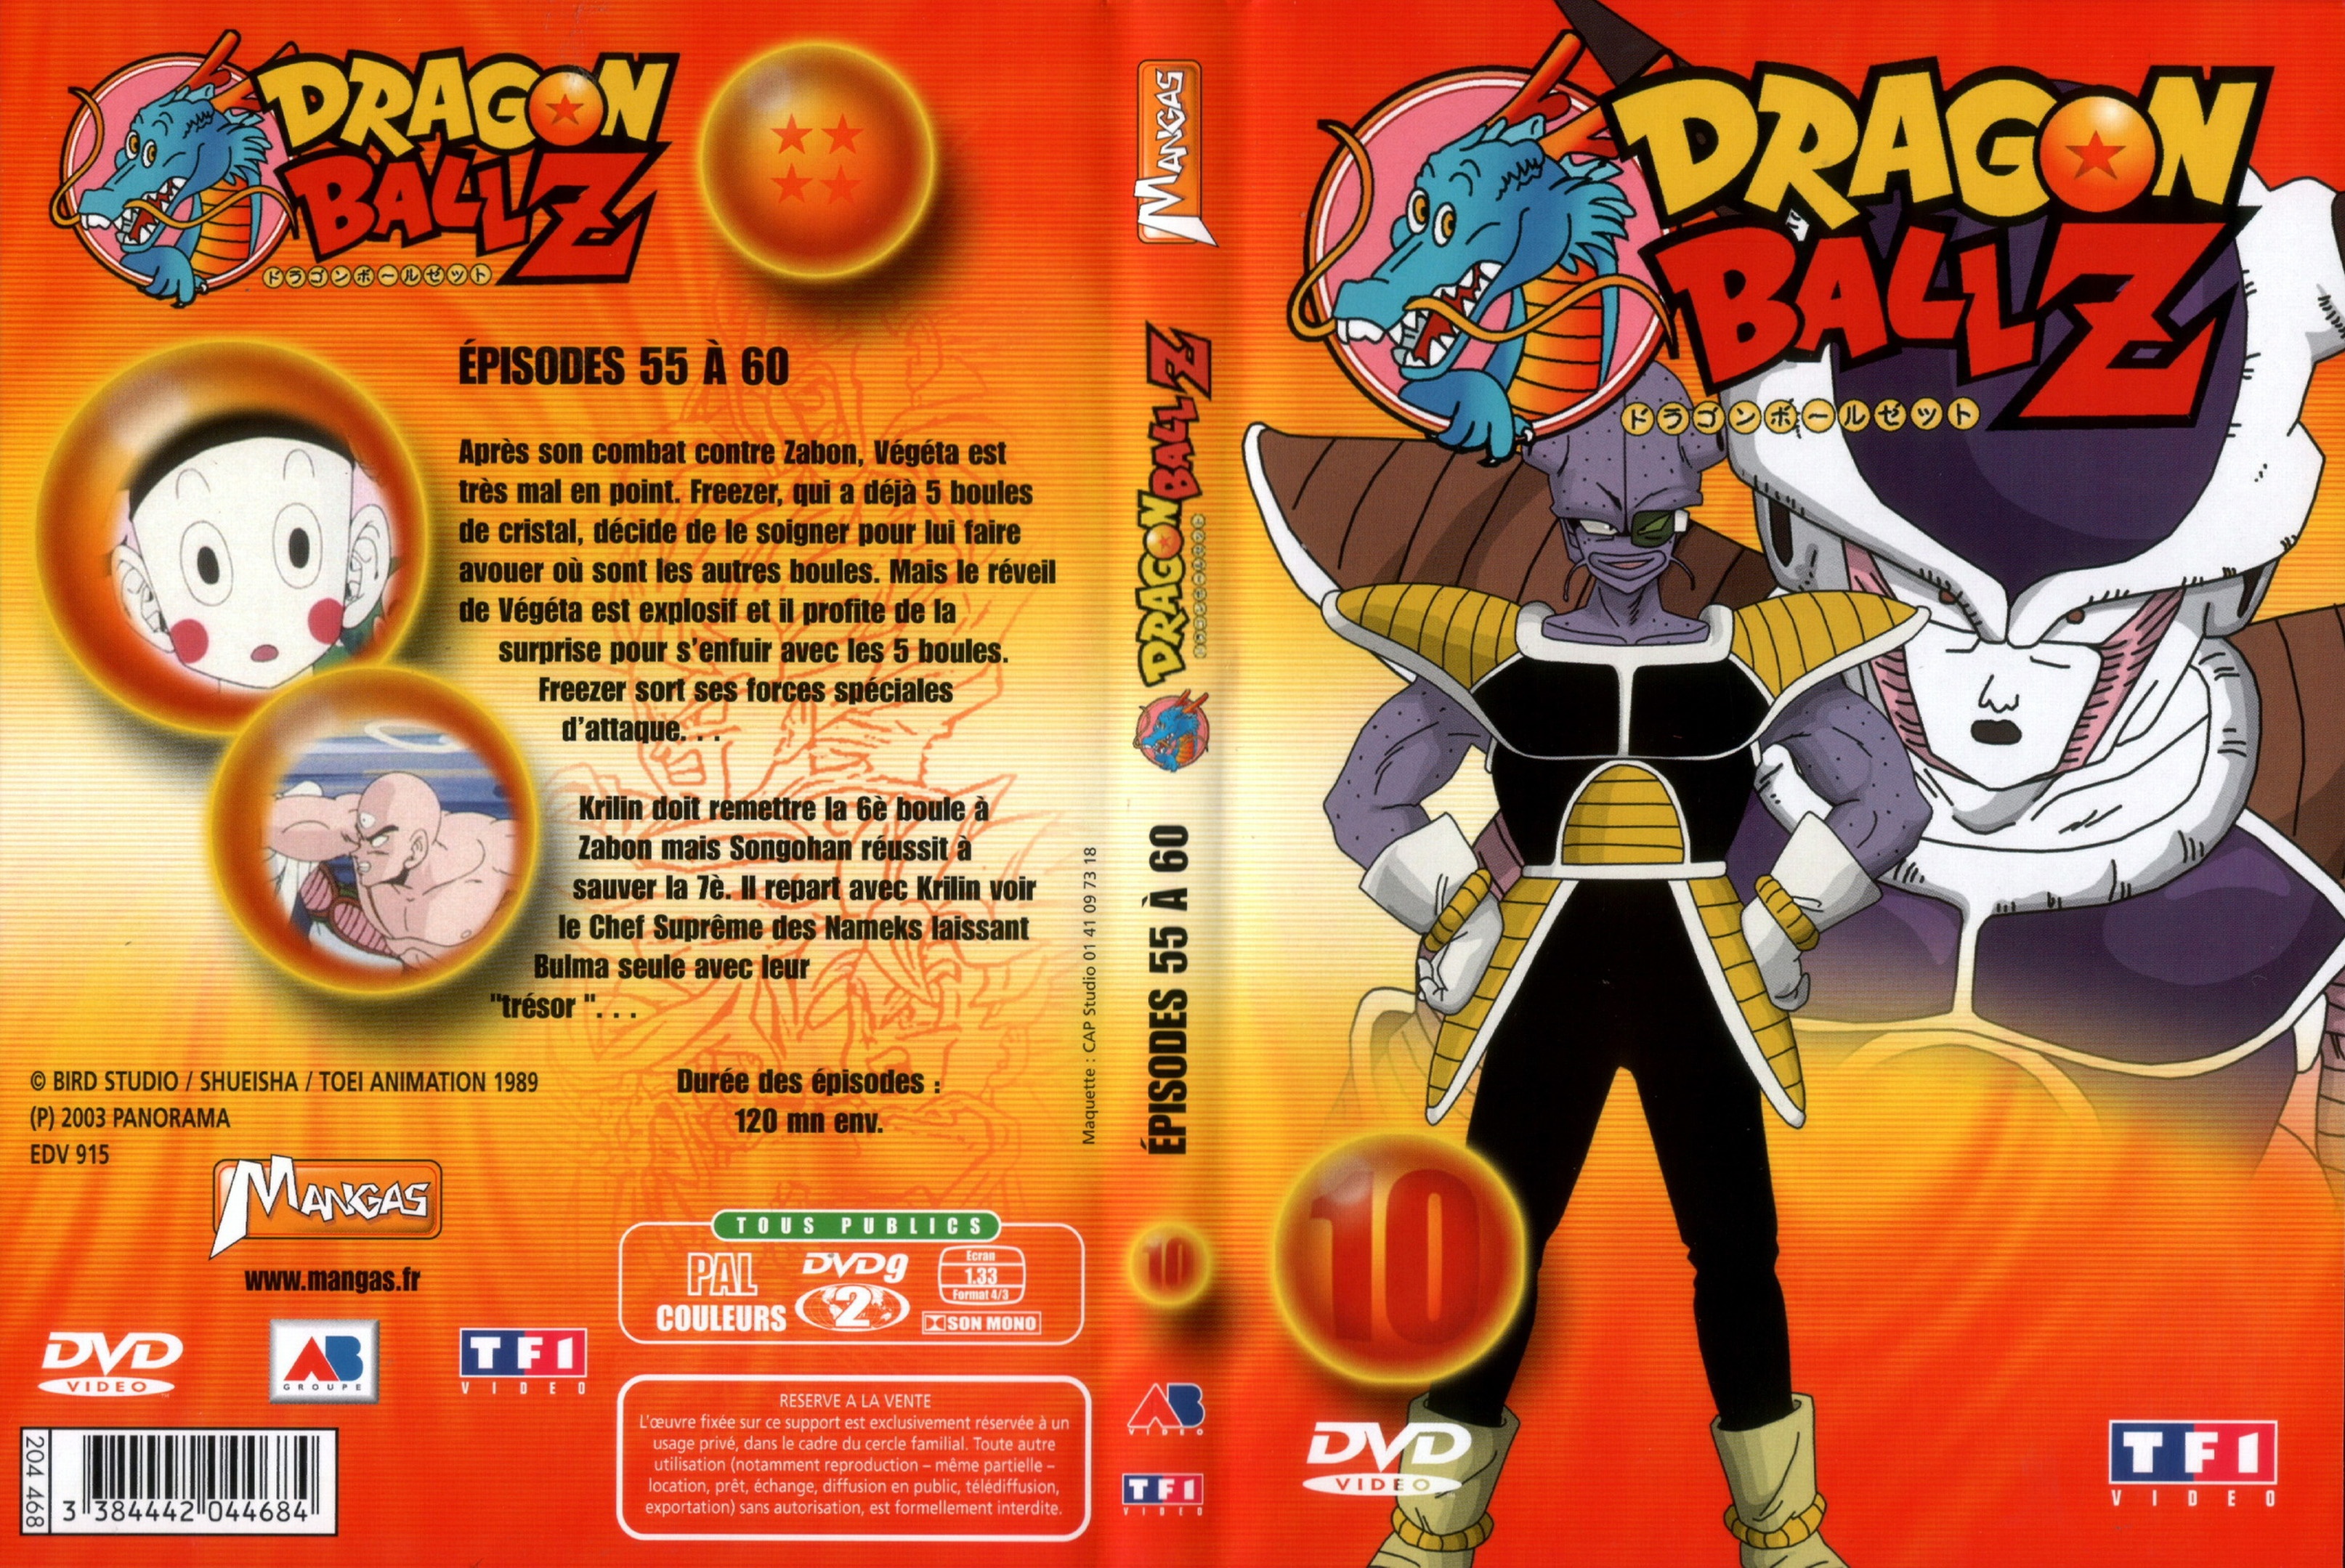 Jaquette DVD Dragon ball Z vol 10